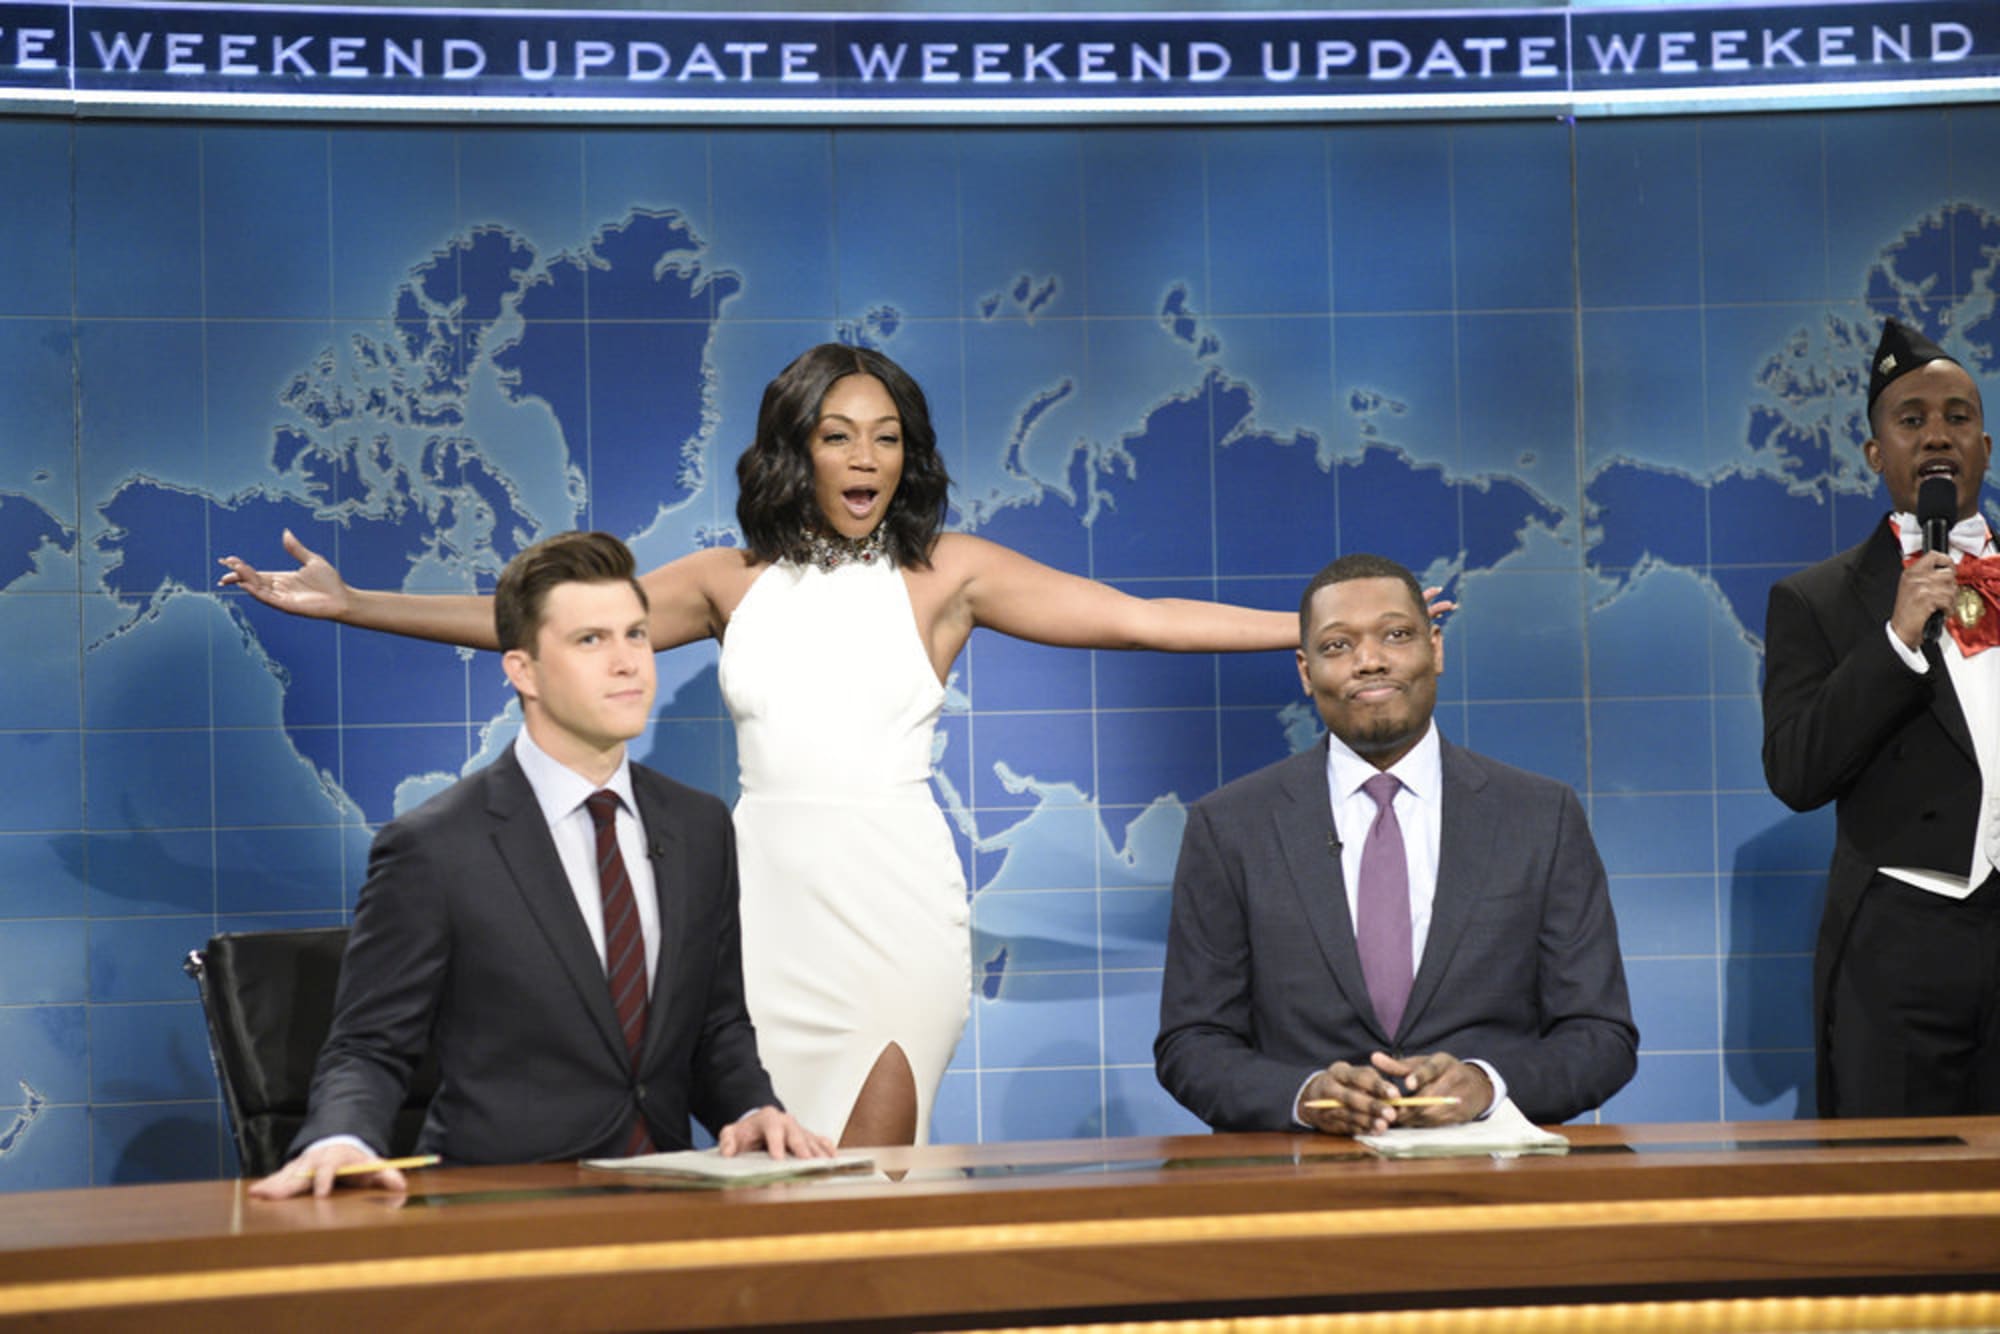 Is Saturday Night Live new tonight, November 25?